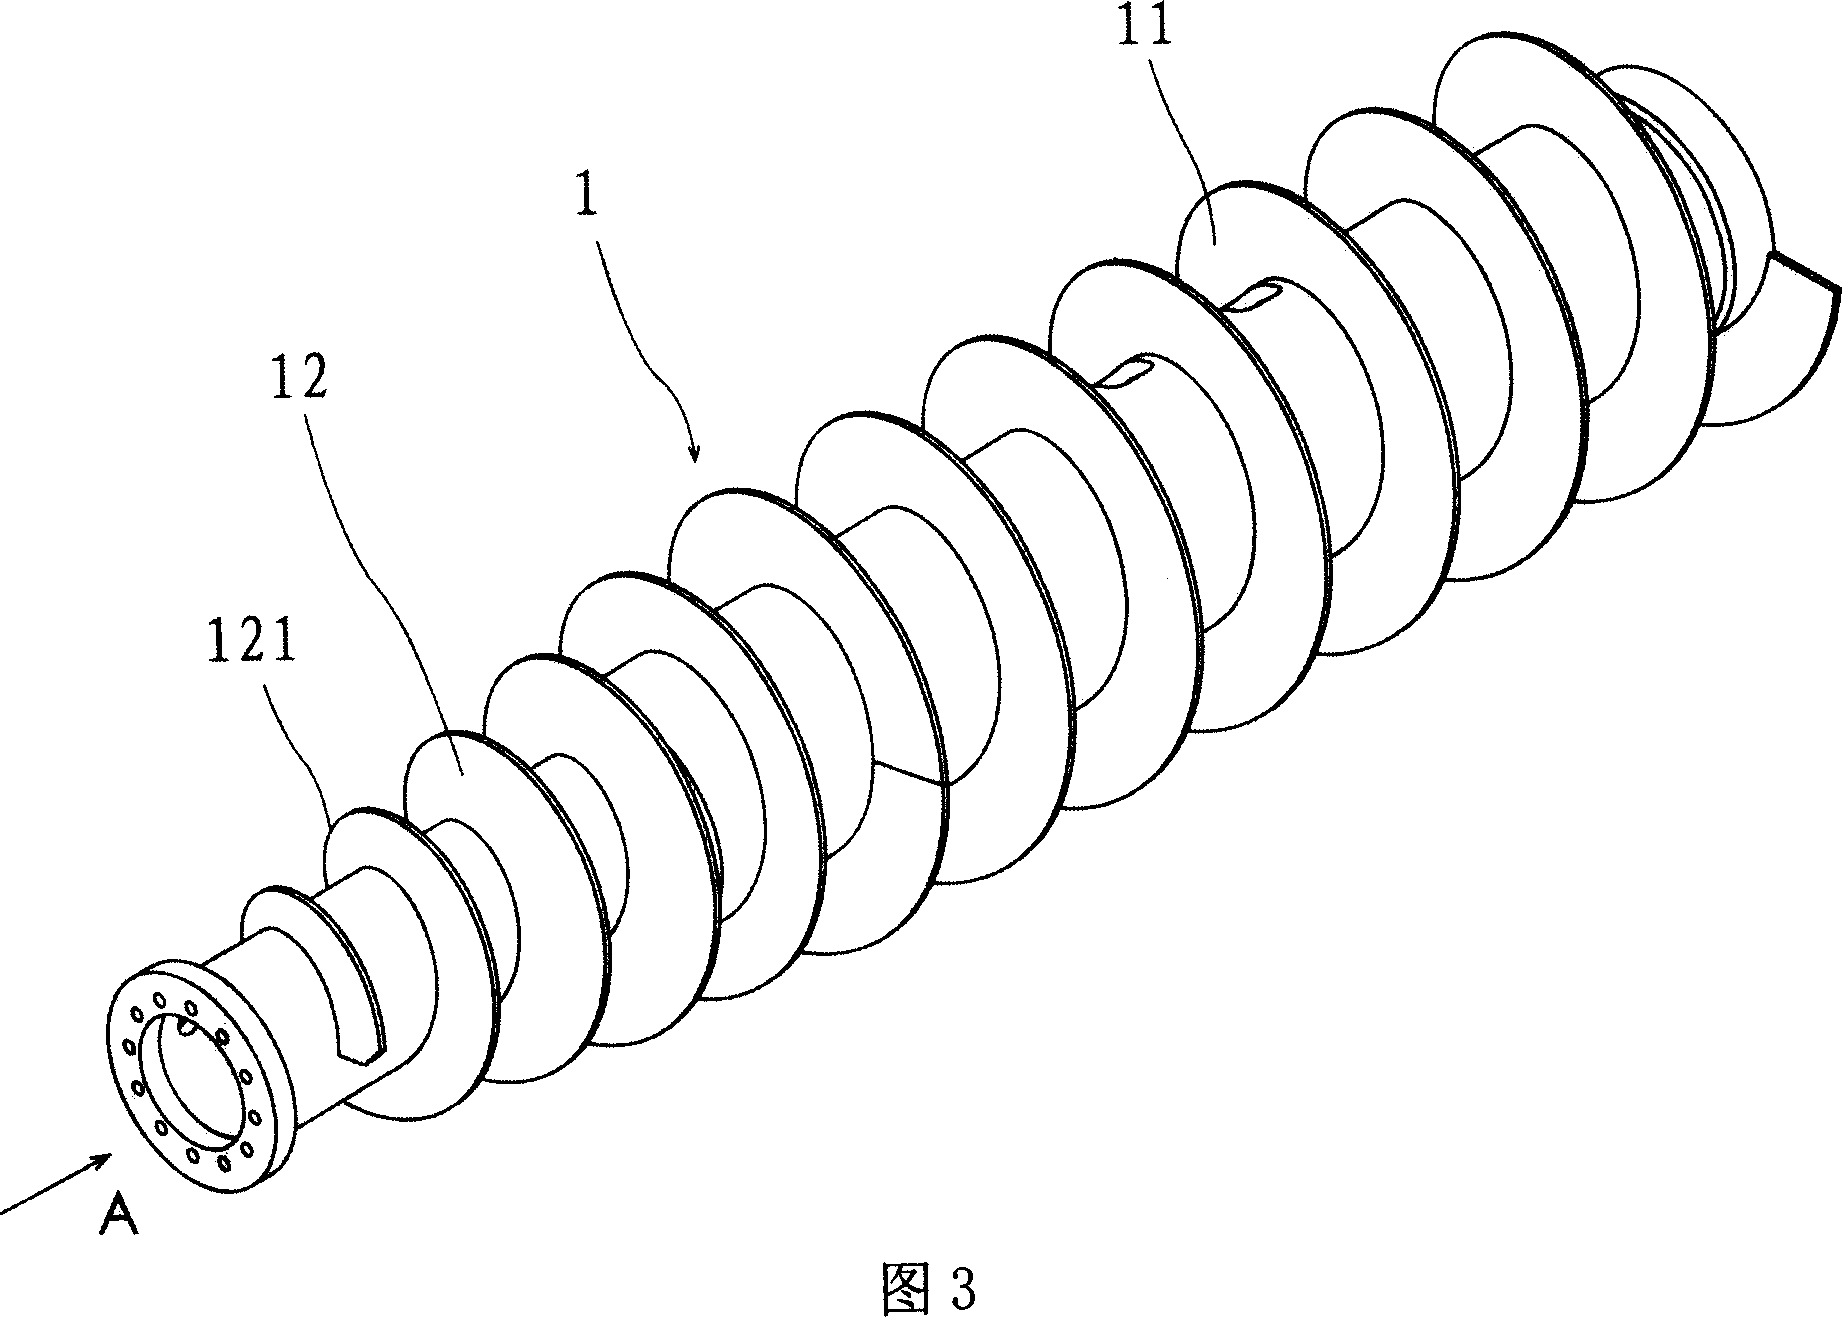 Spiral conveyer structure for horizontal centrifugal machine